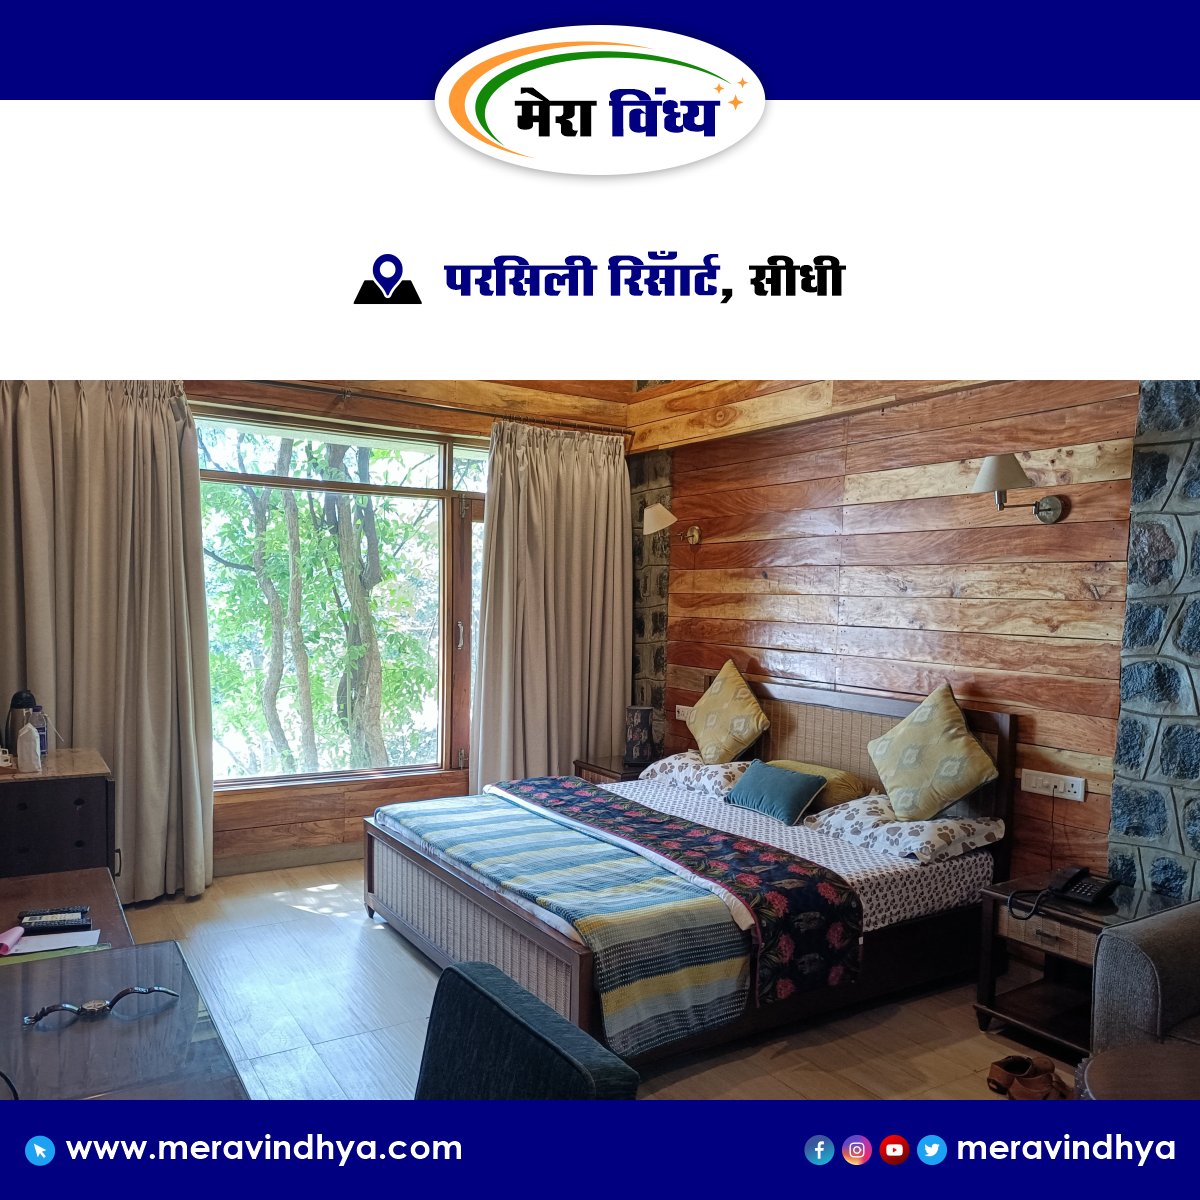 📍 Parsili Resort, Sidhi

✅ ऐसे ही रोचक Post के लिए फॉलो करें @meravindhya

#meravindhya #parsiliresort #sidhi #resort #mptourism #sidhitourism #vindhyatourism